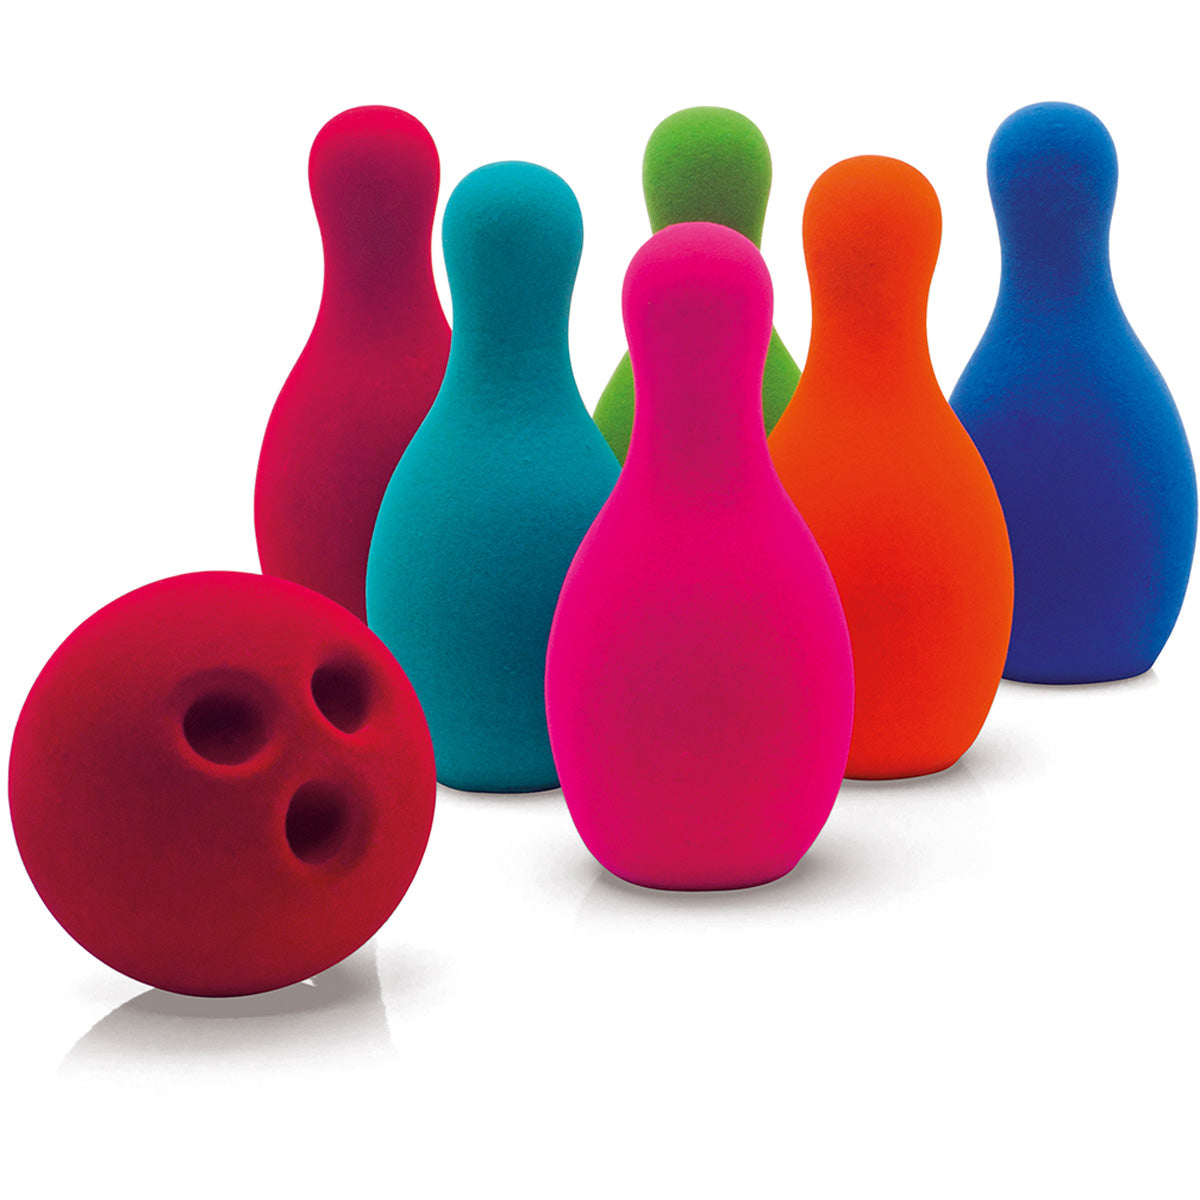 Rubbabu Rubbabu – Bowlingset klein (6 Kegel, 1 Ball)